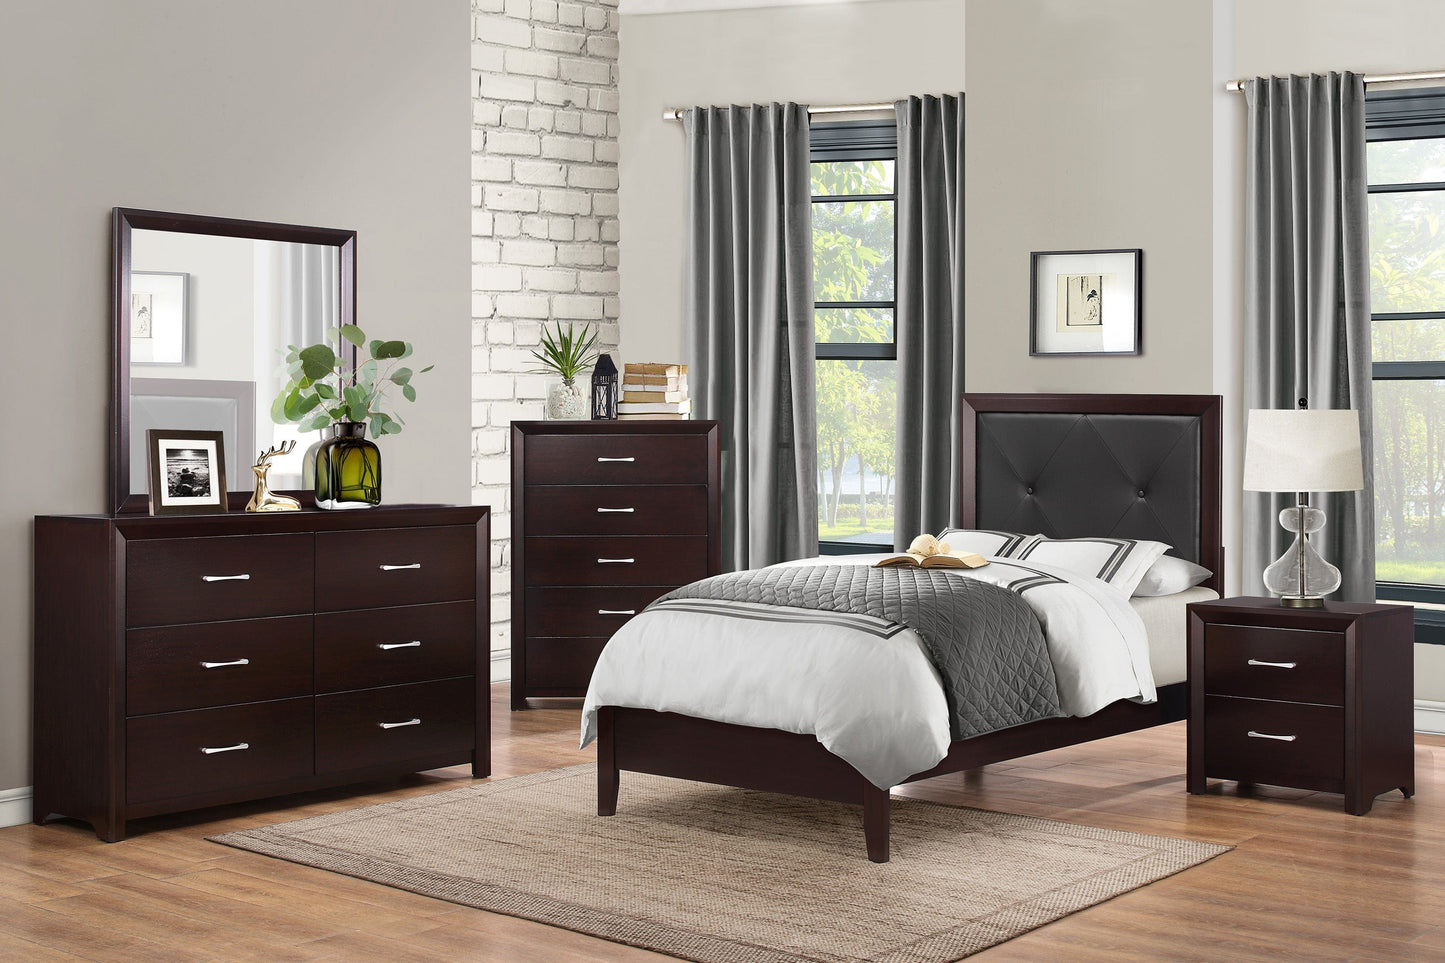 1pc Dresser of 6x Drawers Silver Tone Bar Pulls Contemporary Design Bedroom Furniture, Espresso Finish